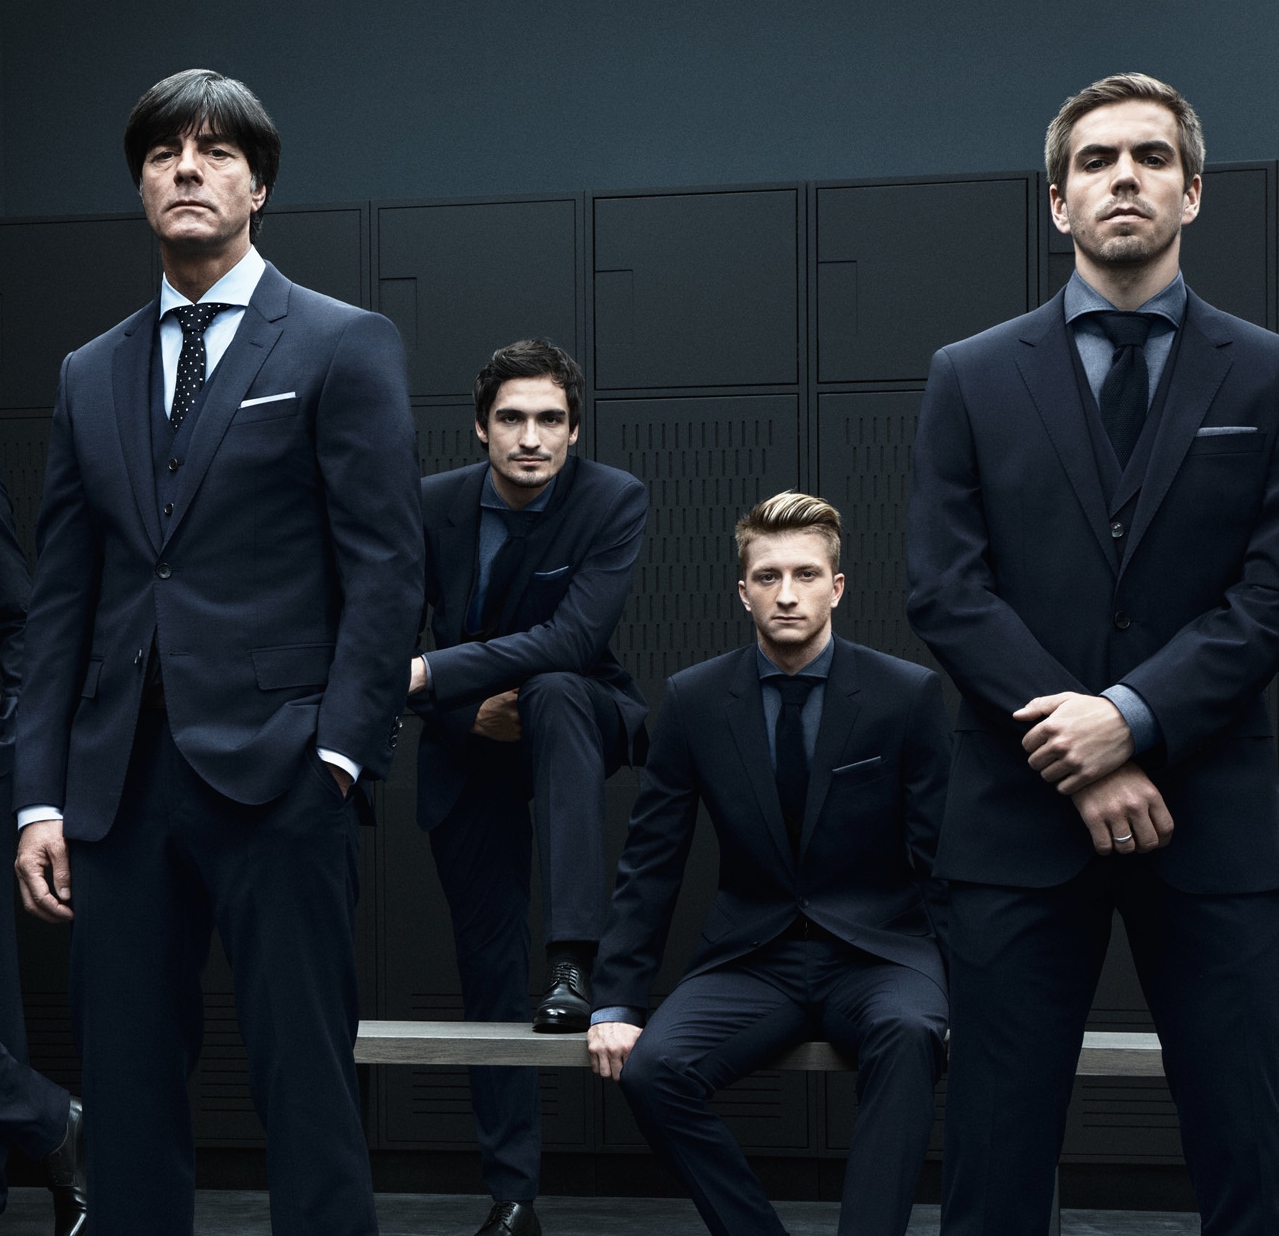 HUGO BOSS Outfits the German Football Team for World Cup 2014 | SENATUS